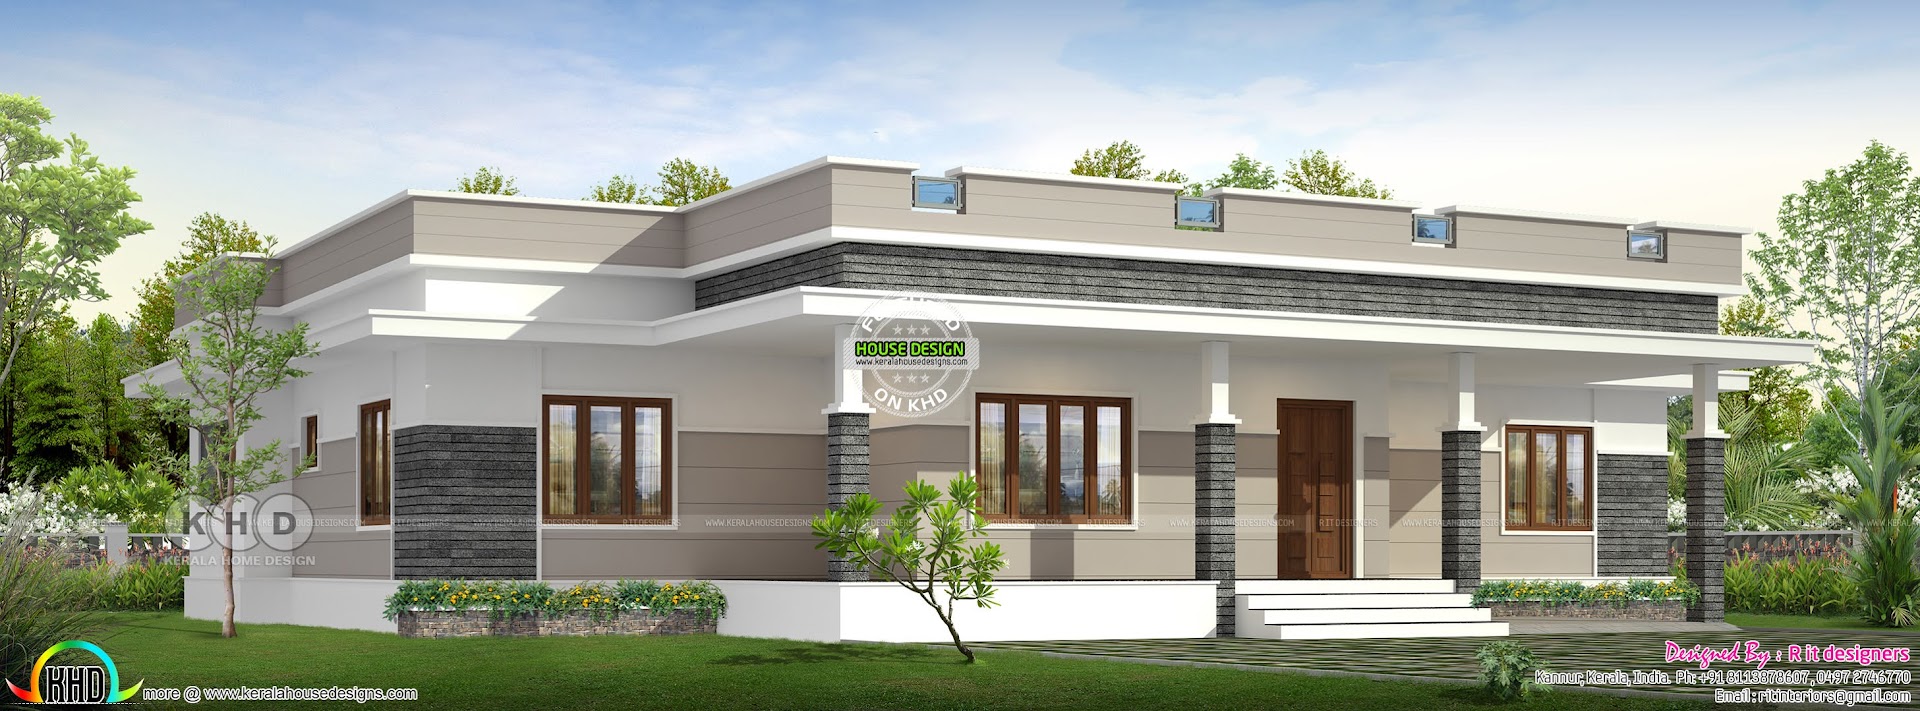 2298 Square Feet 3 Bedroom Flat Roof Home Design Kerala Home